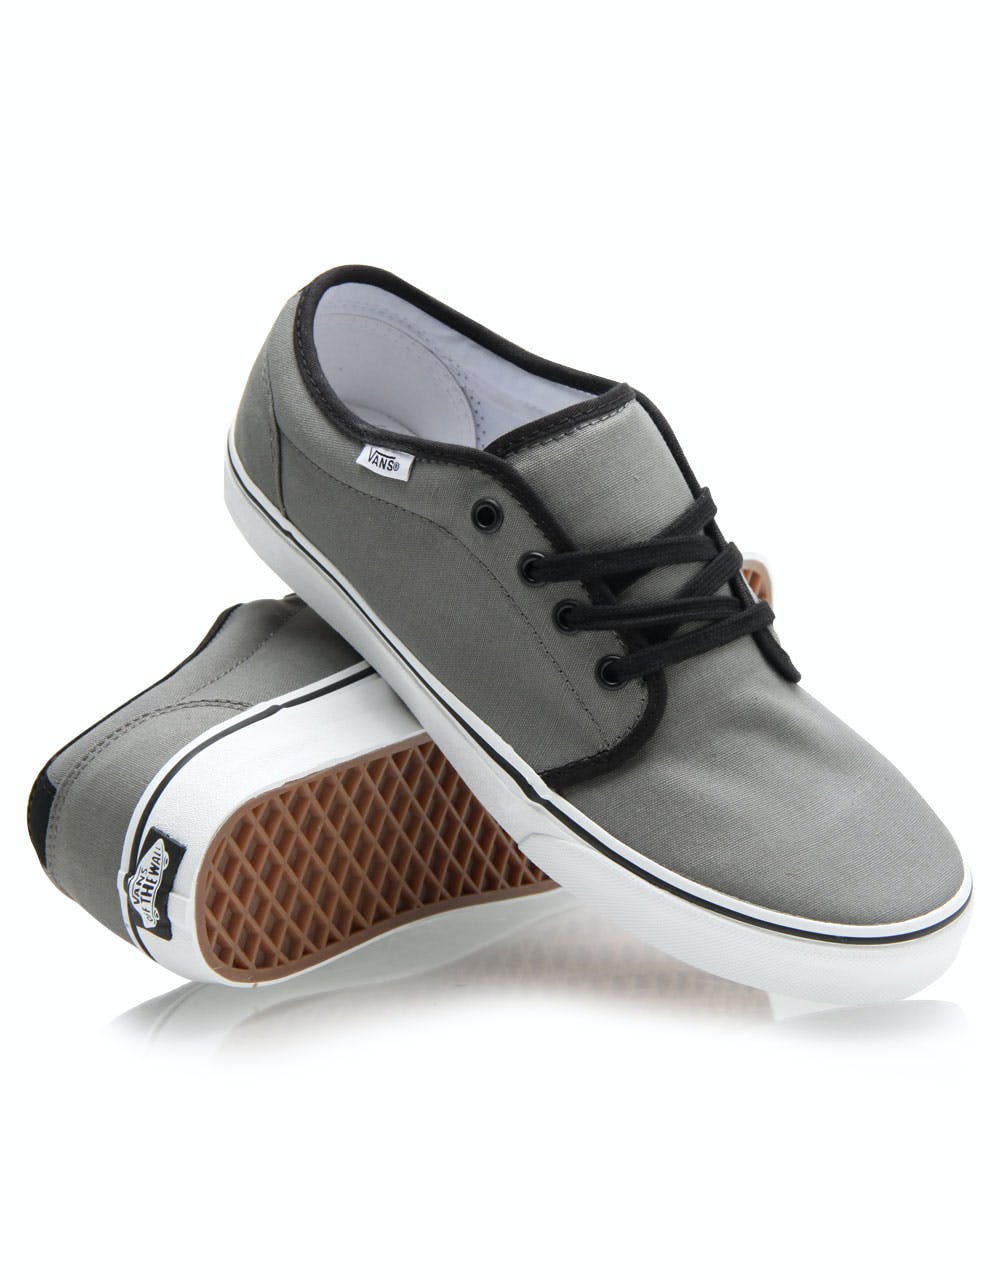 Vans 106 Vulc Skate Shoes